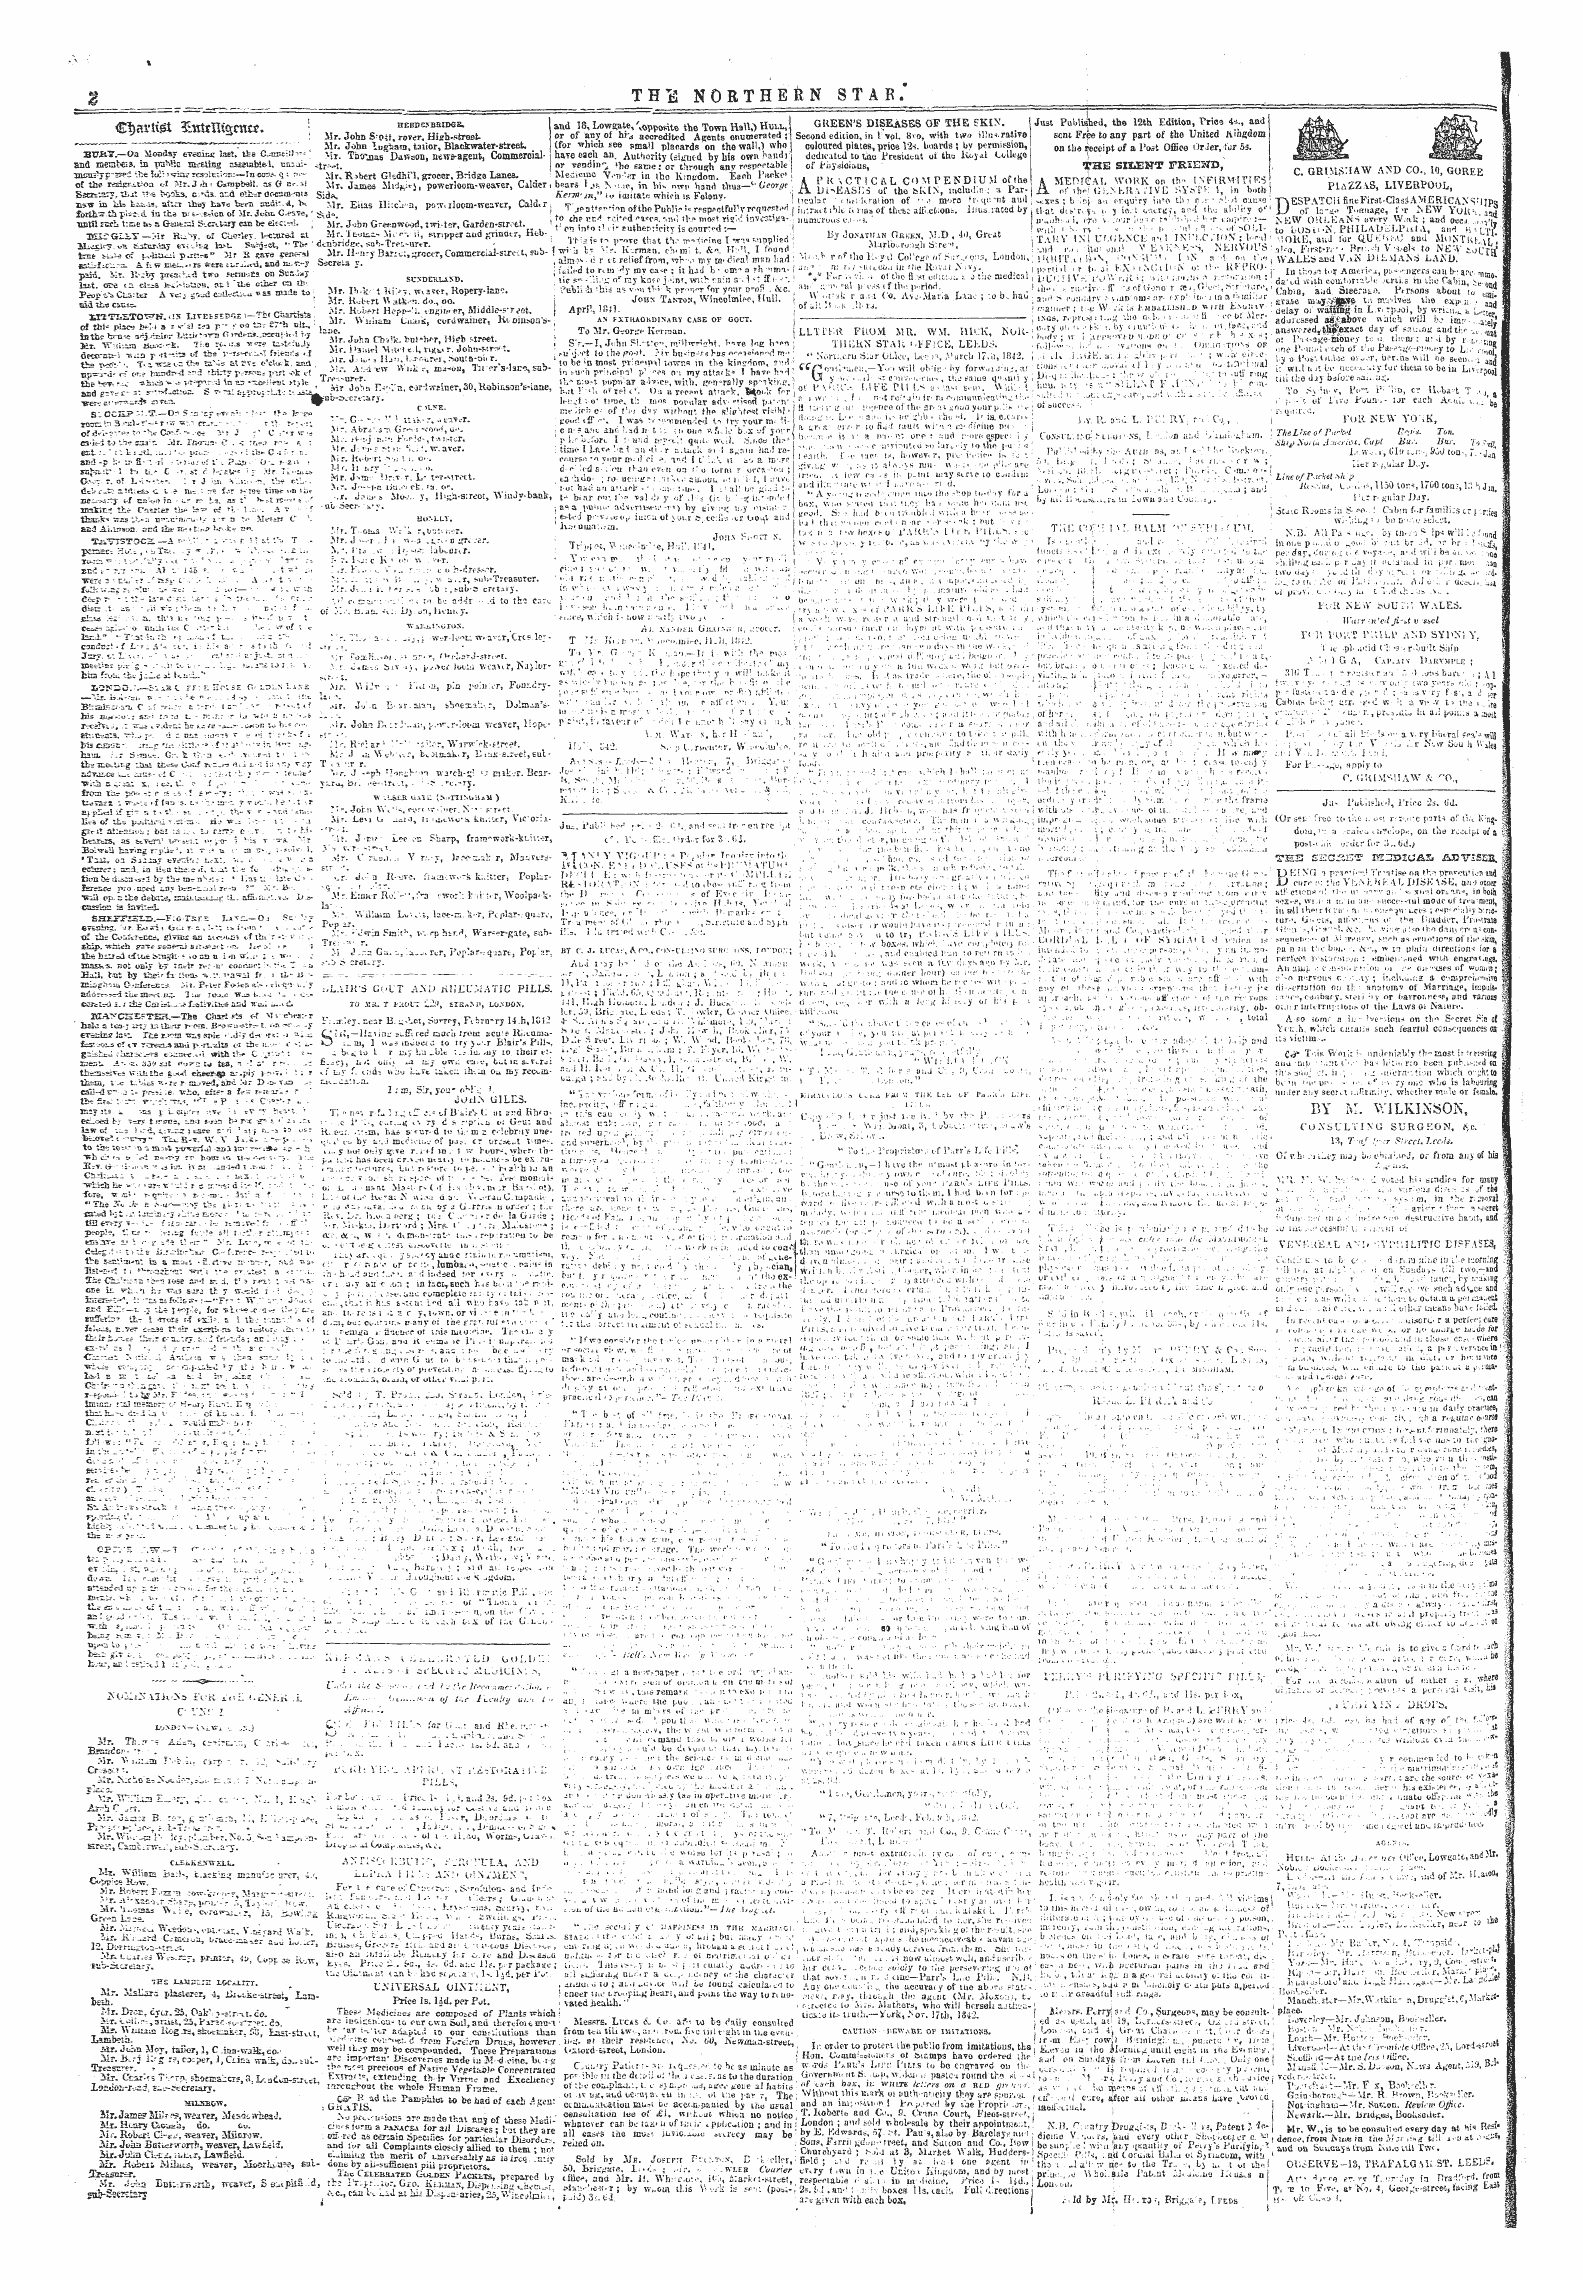 Northern Star (1837-1852): jS F Y, 5th edition - Ad00214